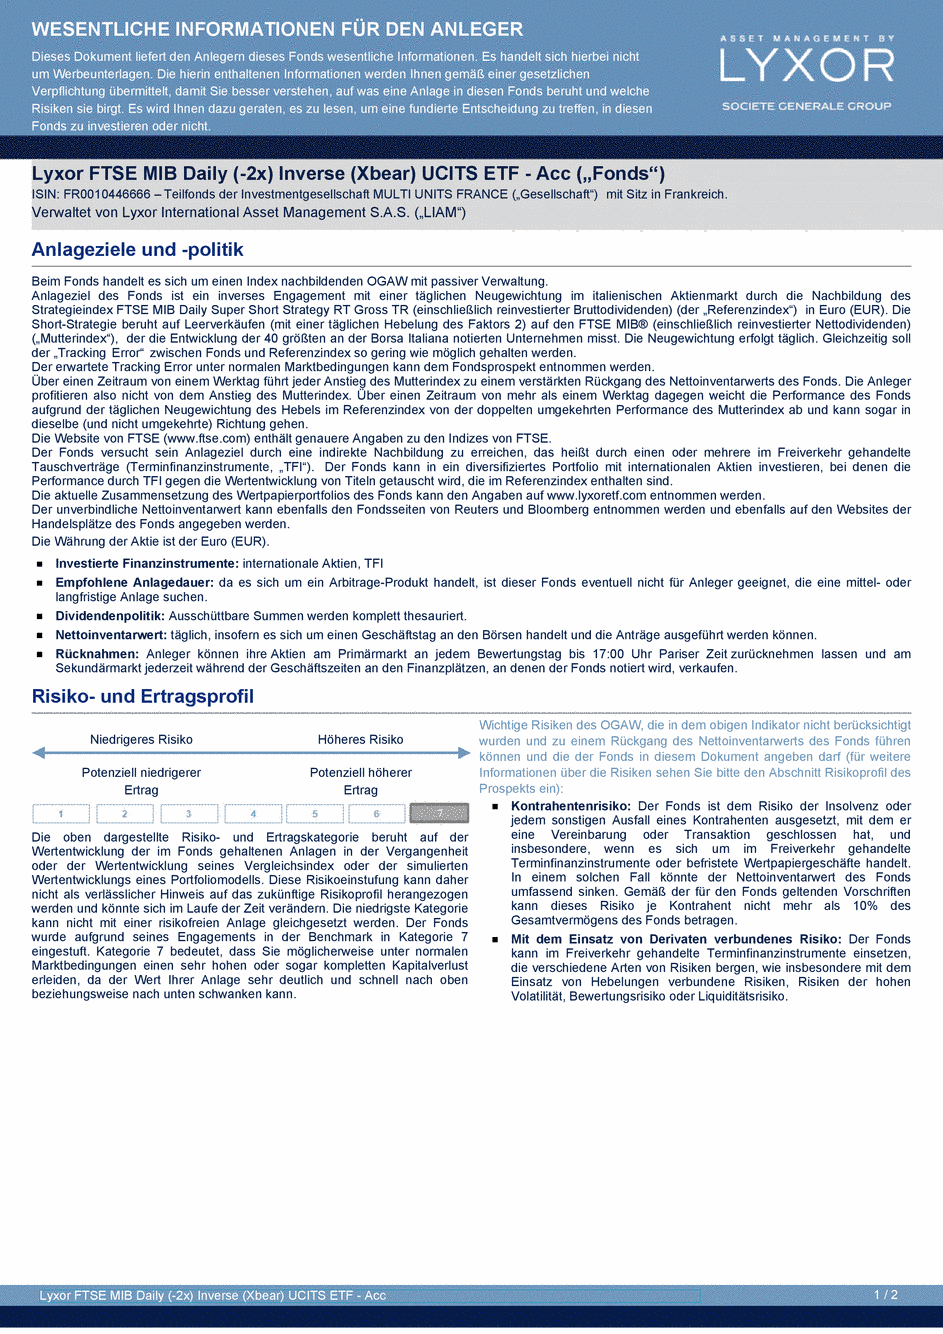 DICI Lyxor FTSE MIB Daily (-2x) Inverse (Xbear) UCITS ETF - Acc - 19/02/2021 - Allemand